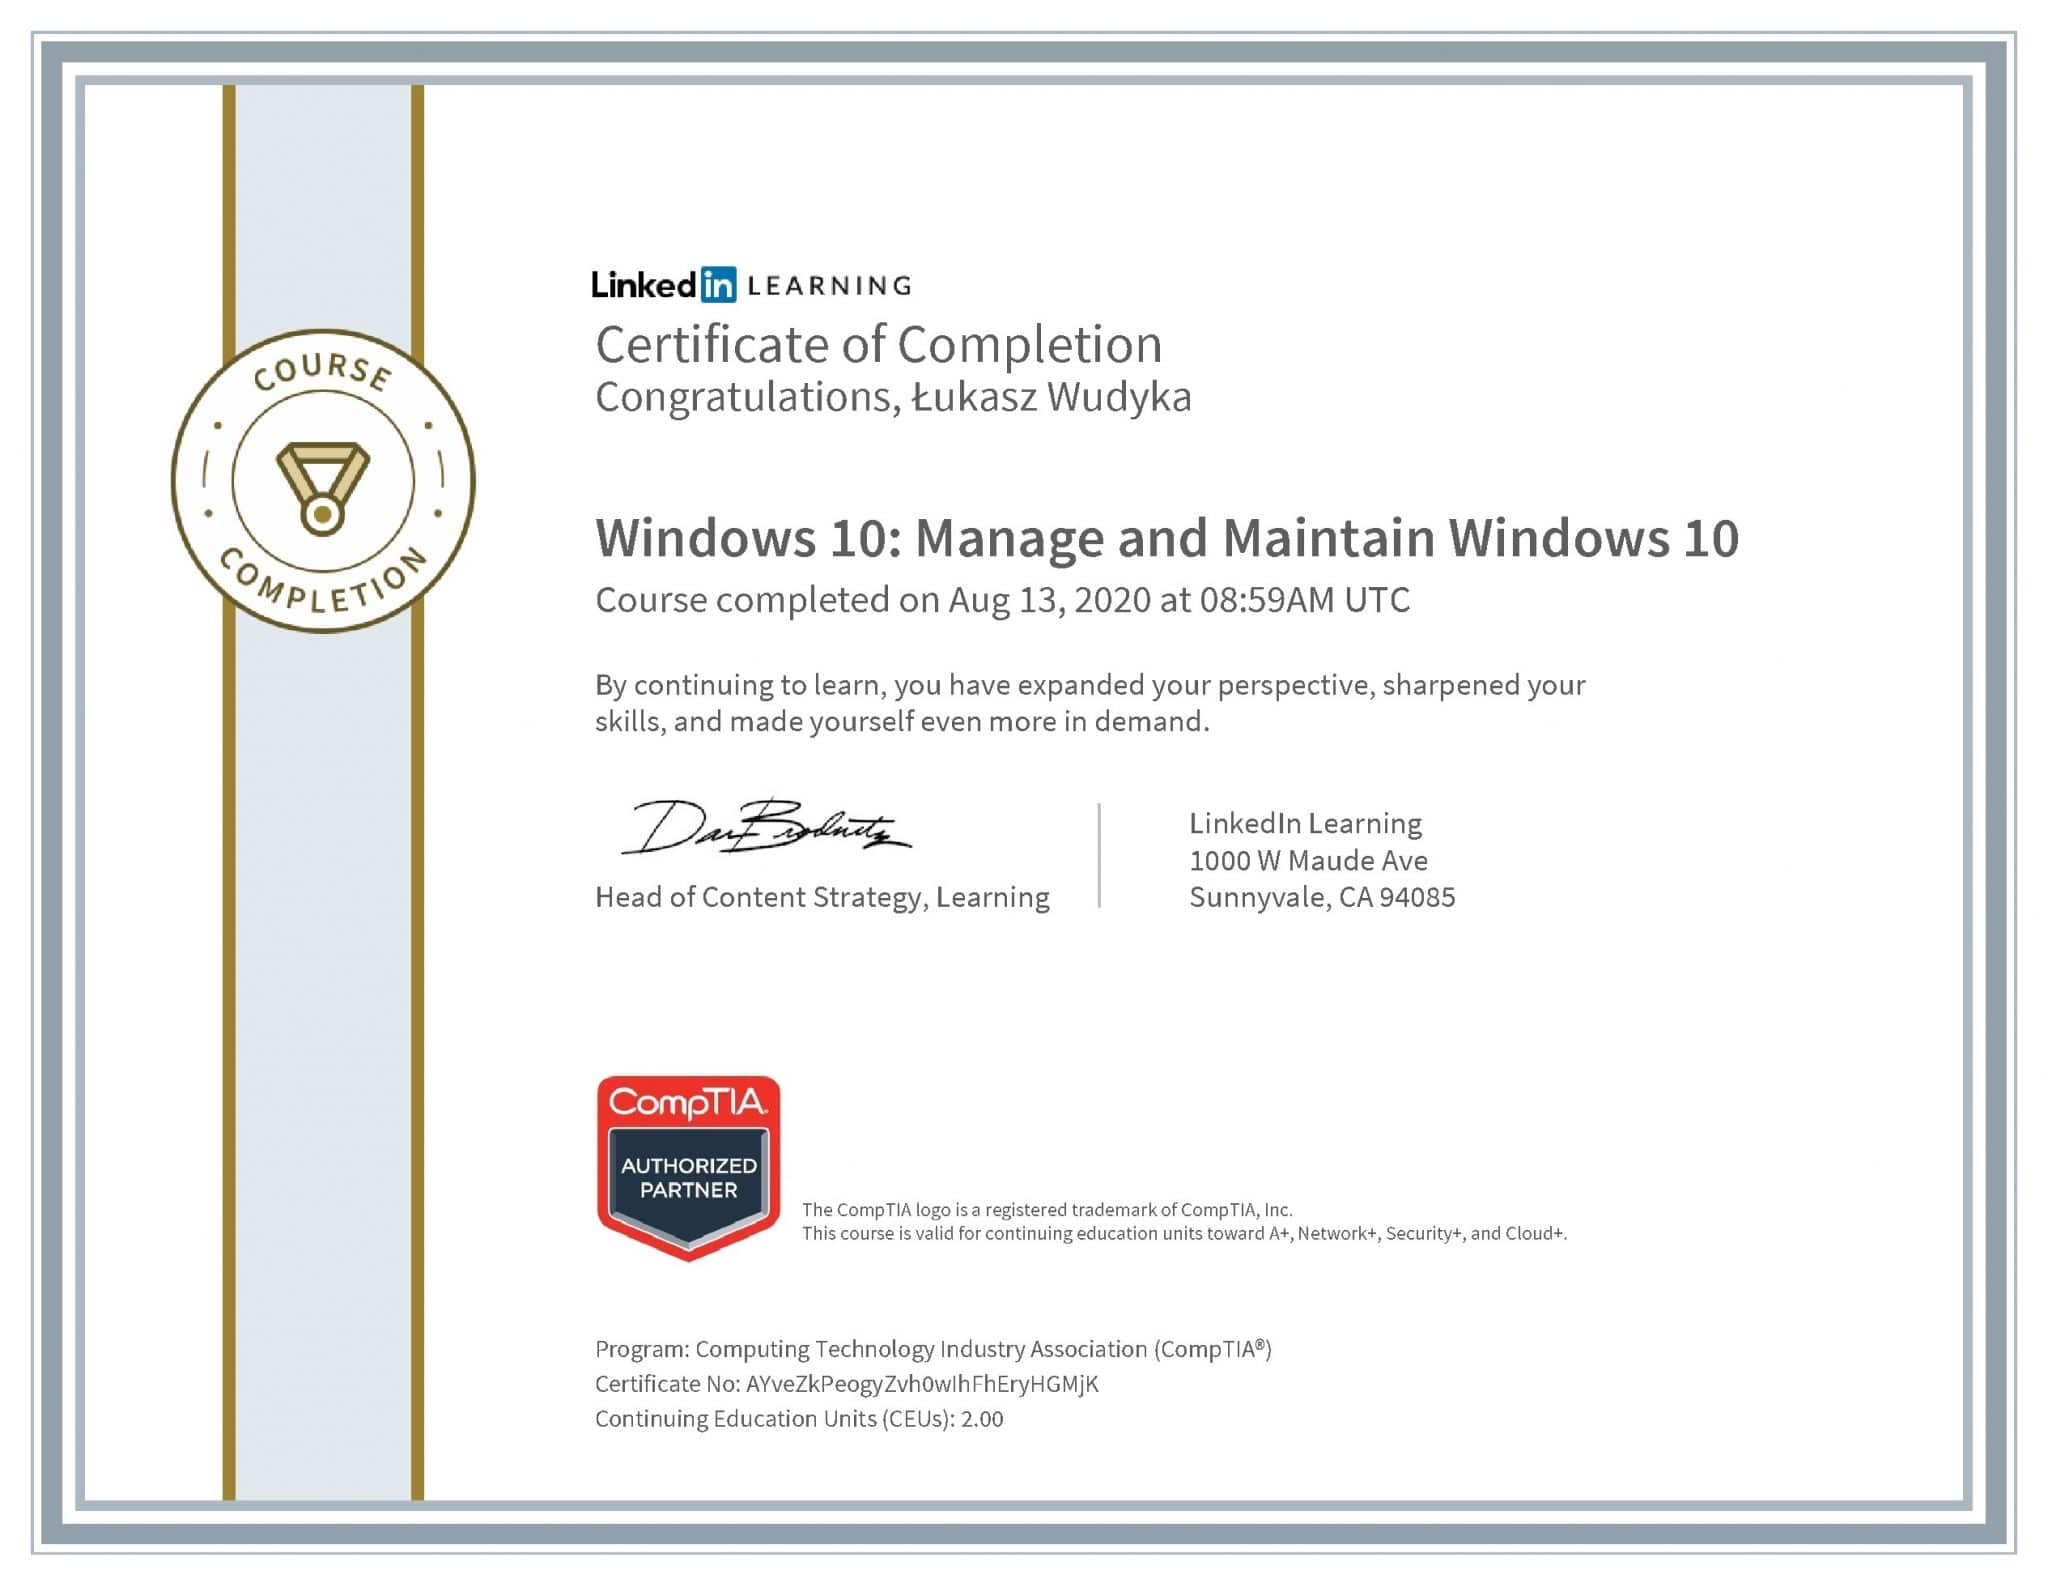 Łukasz Wudyka certyfikat LinkedIn Windows 10: Manage and Maintain Windows 10 CompTIA